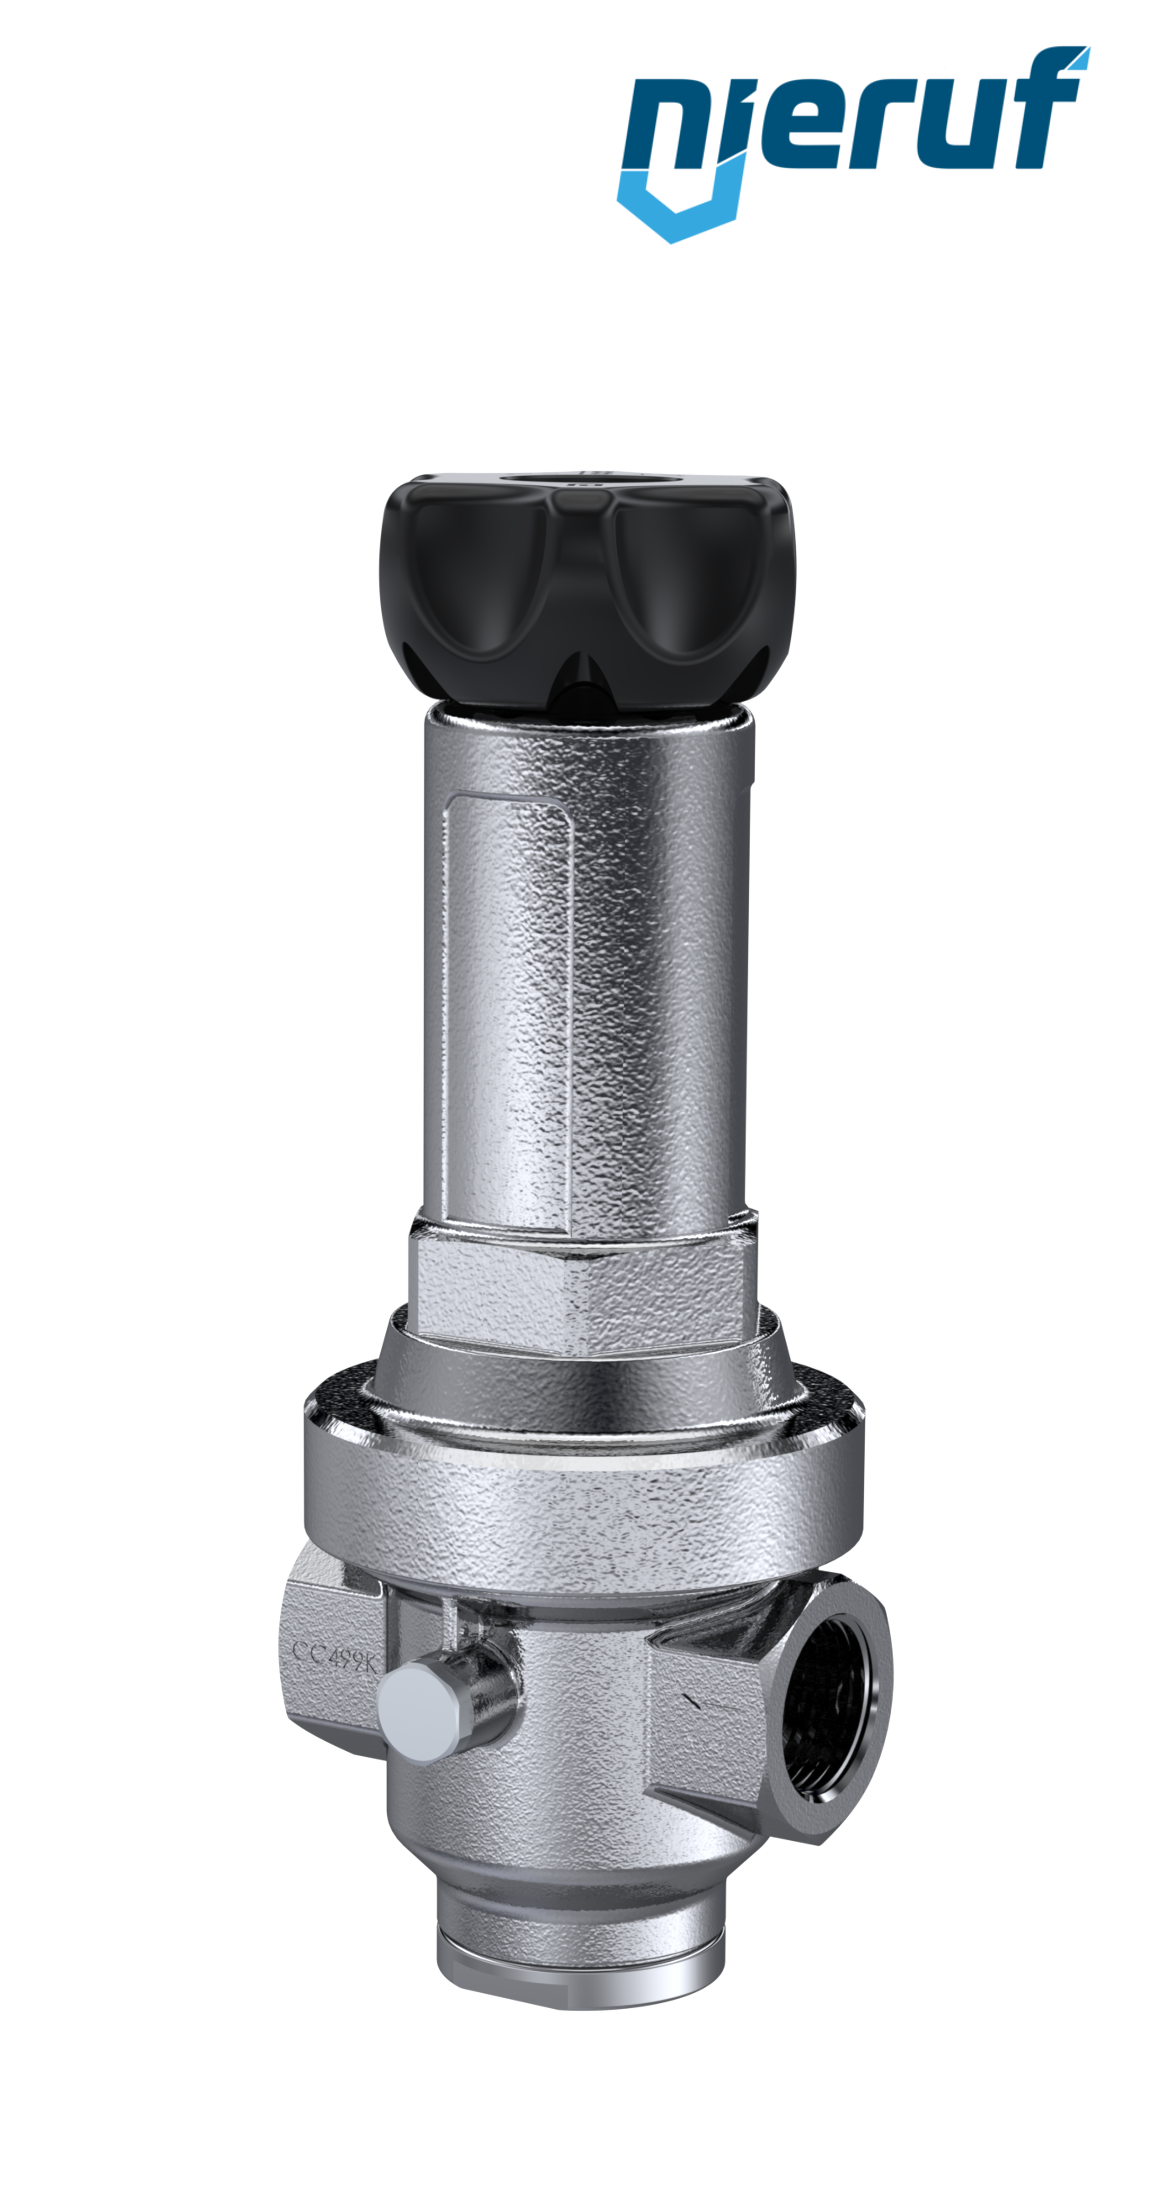 precision-pressure reducing valve 3/4" inch DM15 stainless steel FKM 5.0 - 30.0 bar